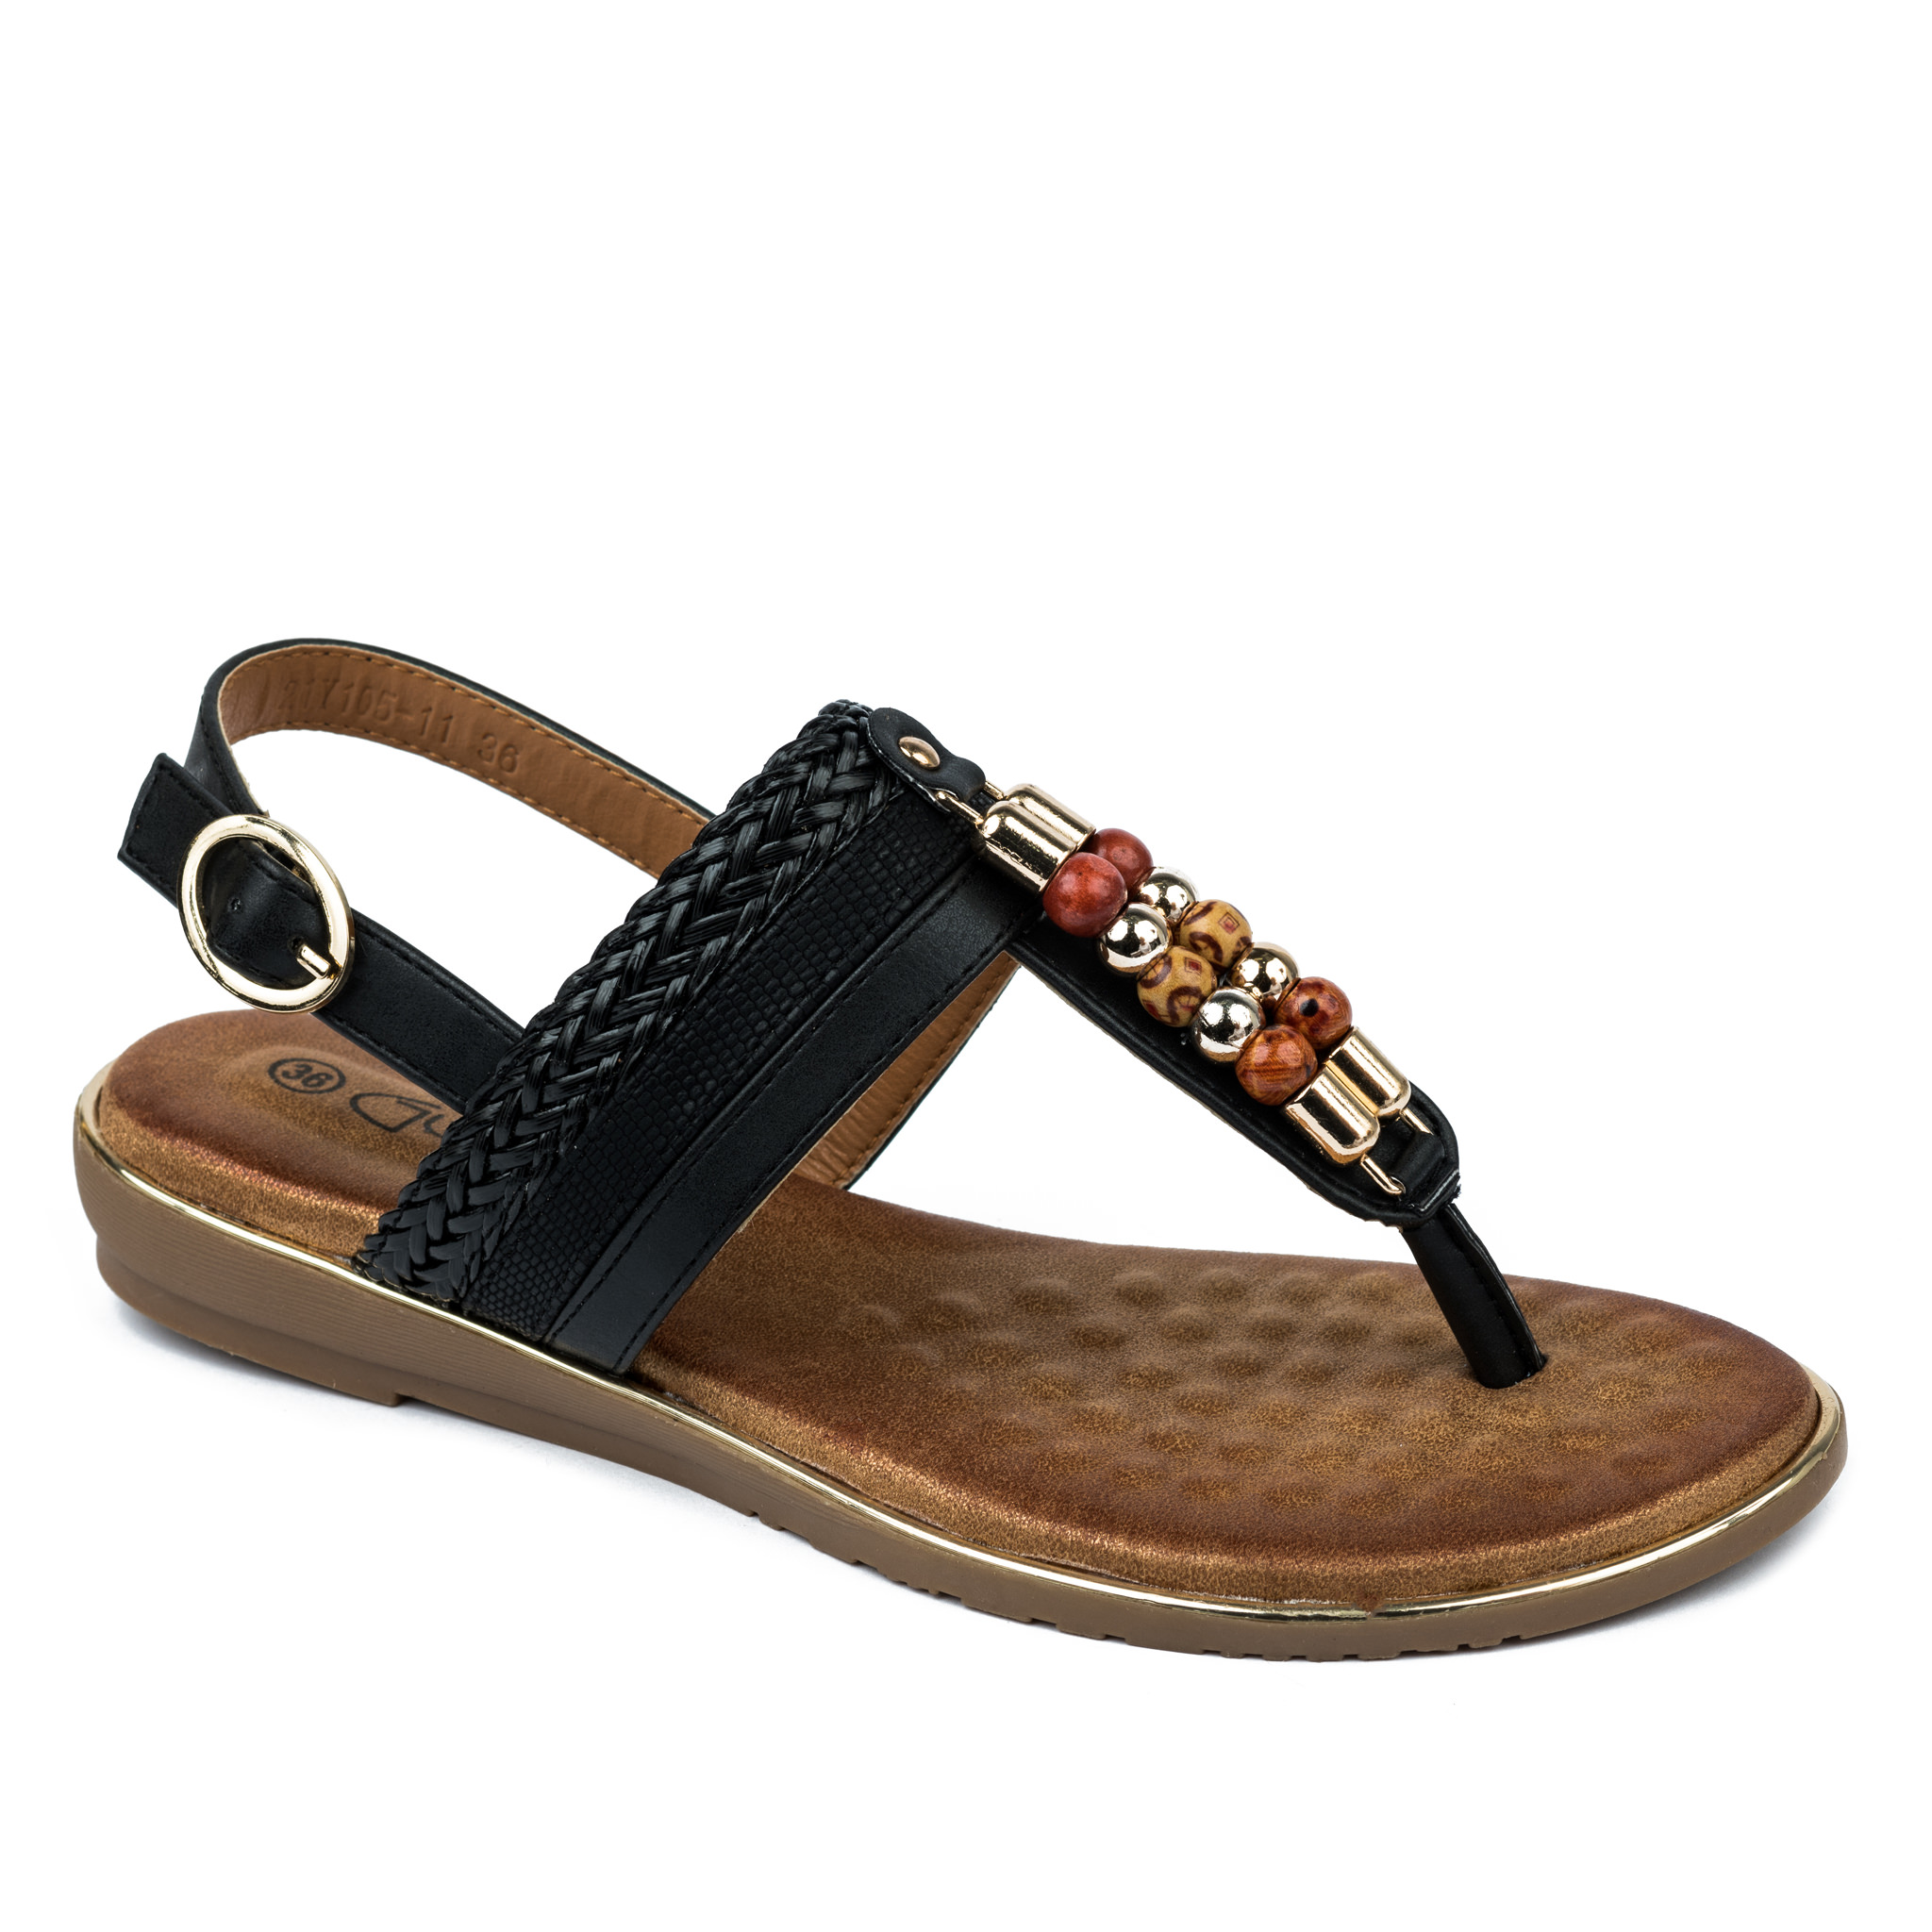 Women sandals A668 - BLACK